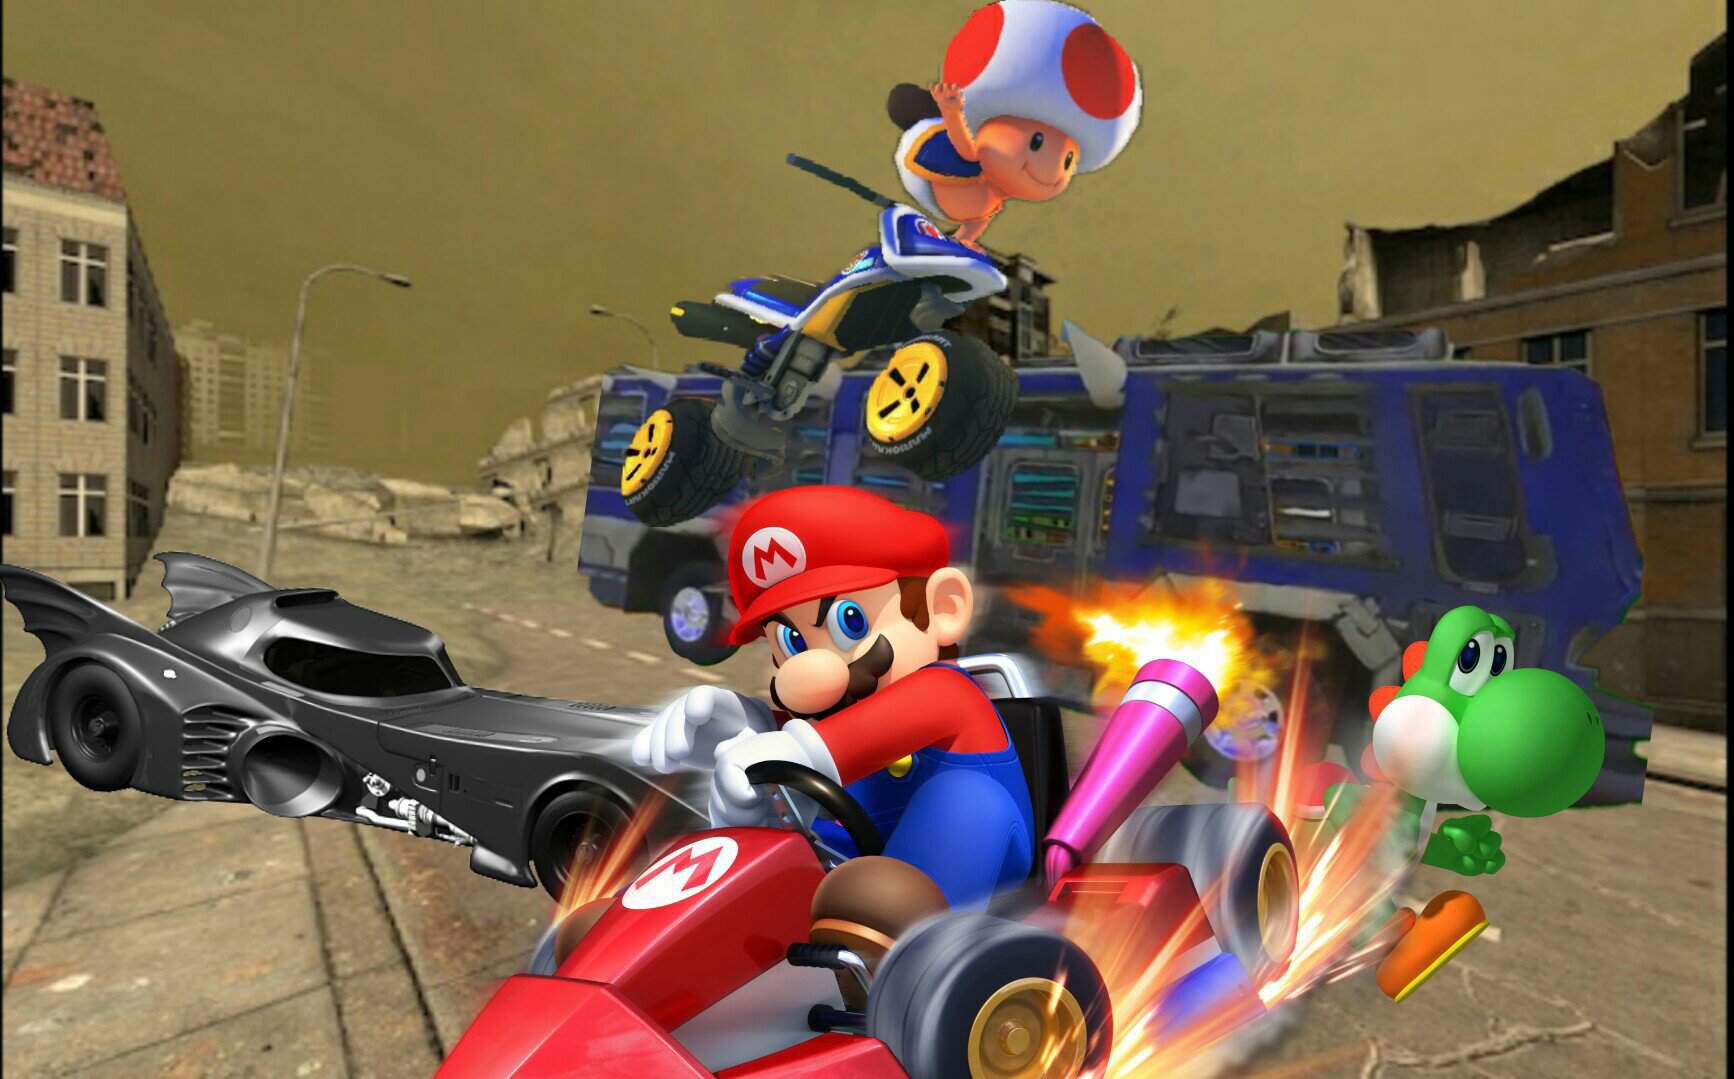 Smg4 Stupid Mario Kart Apocalypse Edition Smg4 Amino 3018